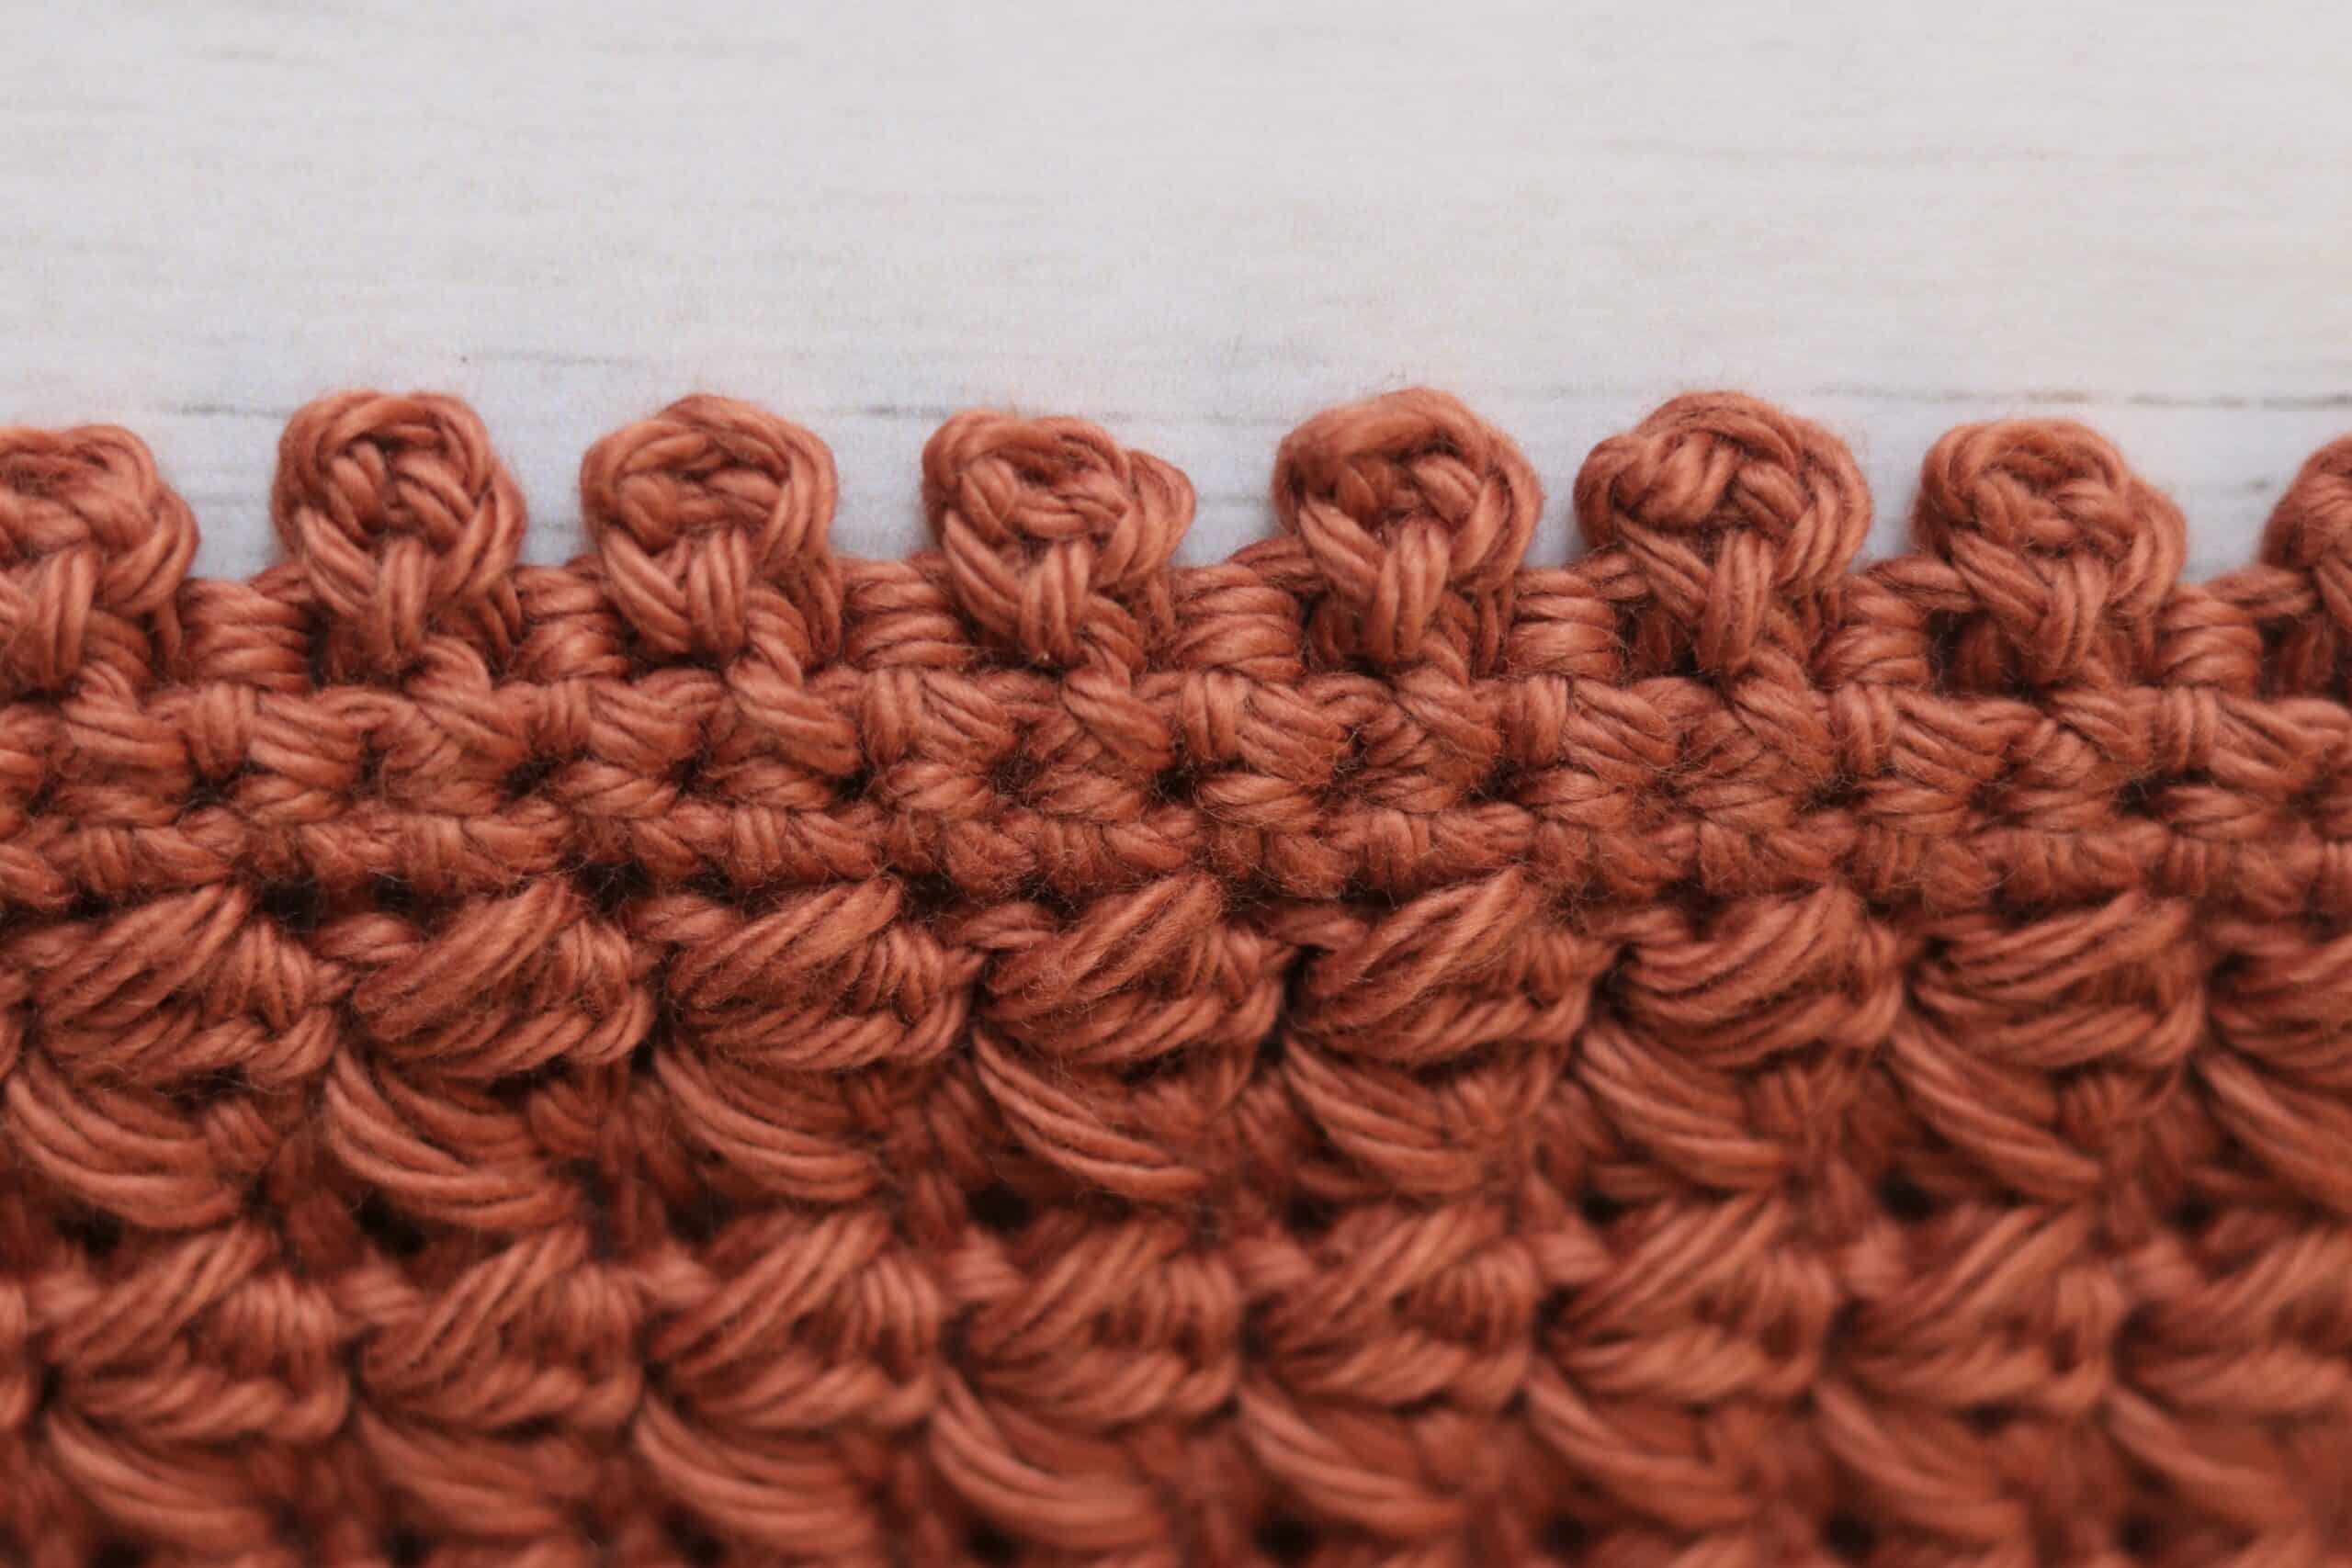 Red lace crochet edging pattern with stitch scheme